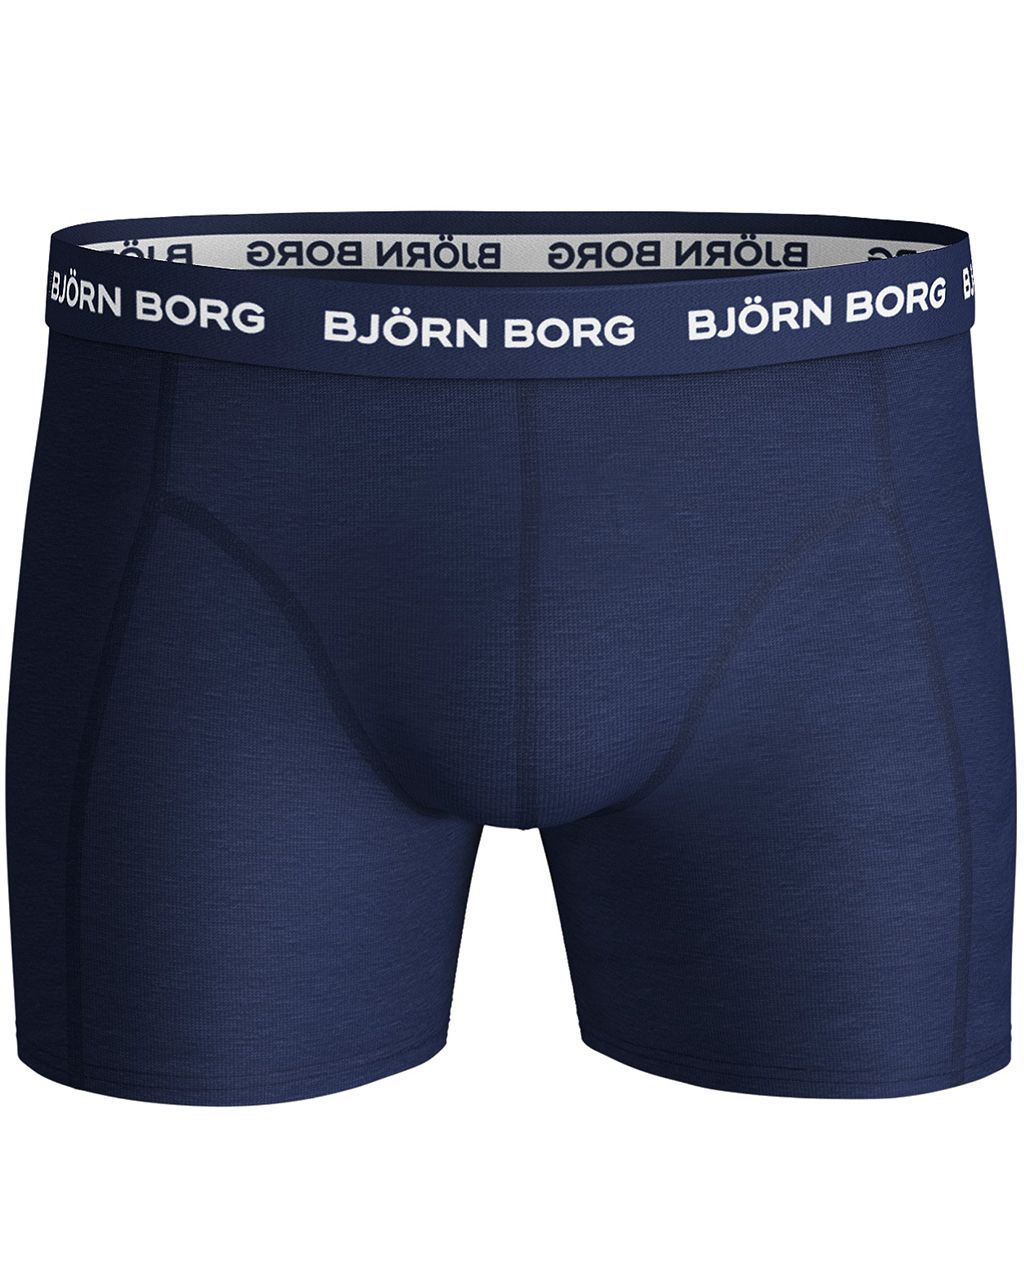 Björn Borg Boxershort 3-pack Blauw 051821-001-L